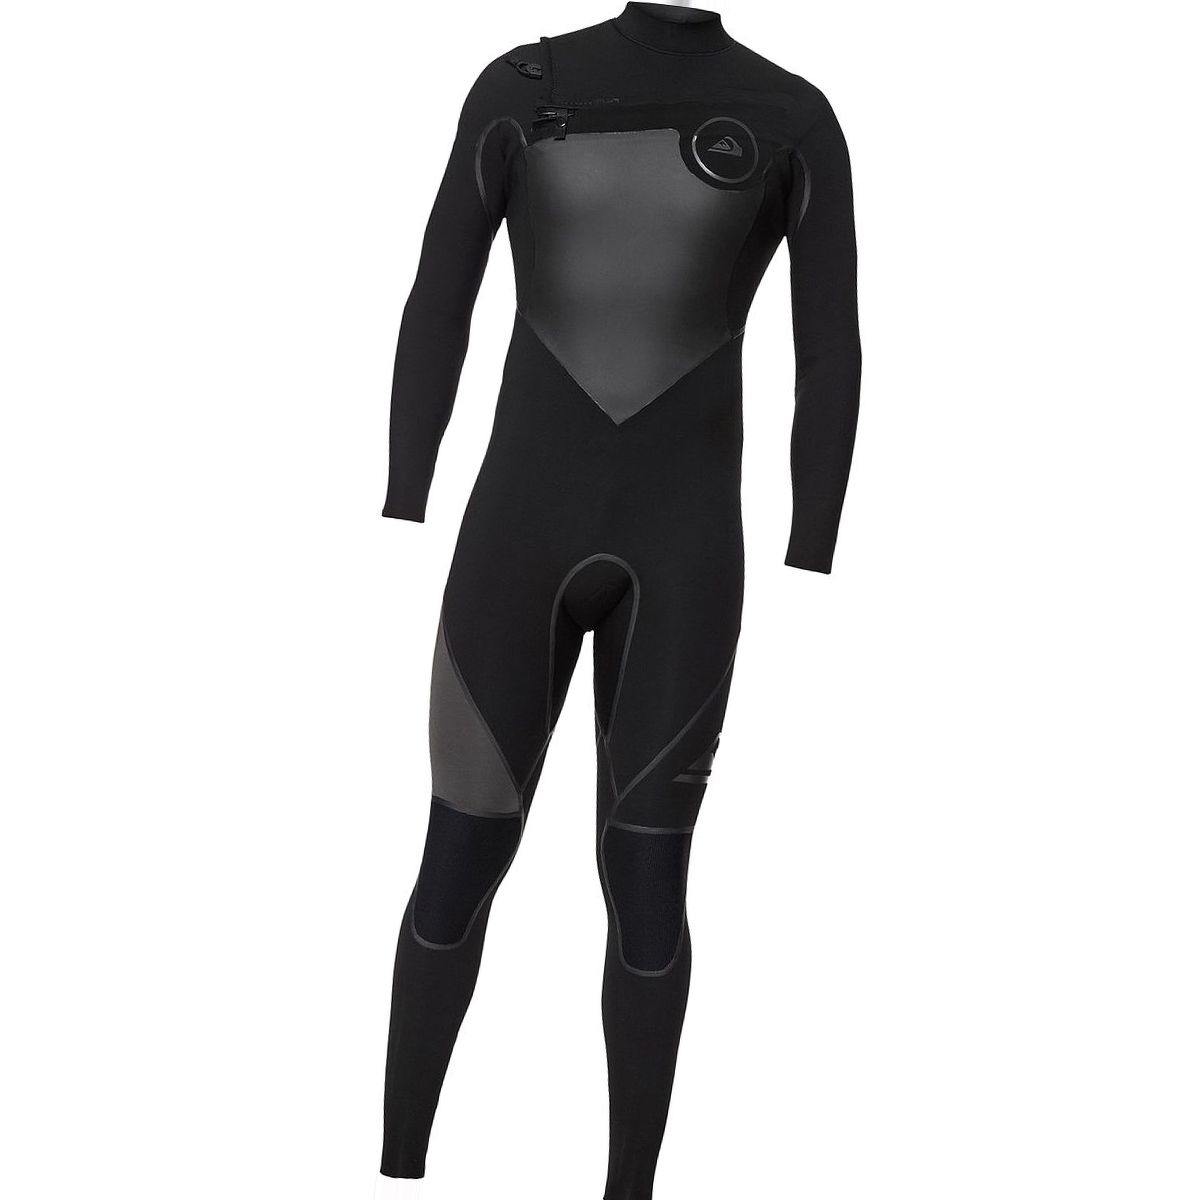 Quiksilver 5/4/3 Syncro Plus Chest-Zip LFS Wetsuit - Men's